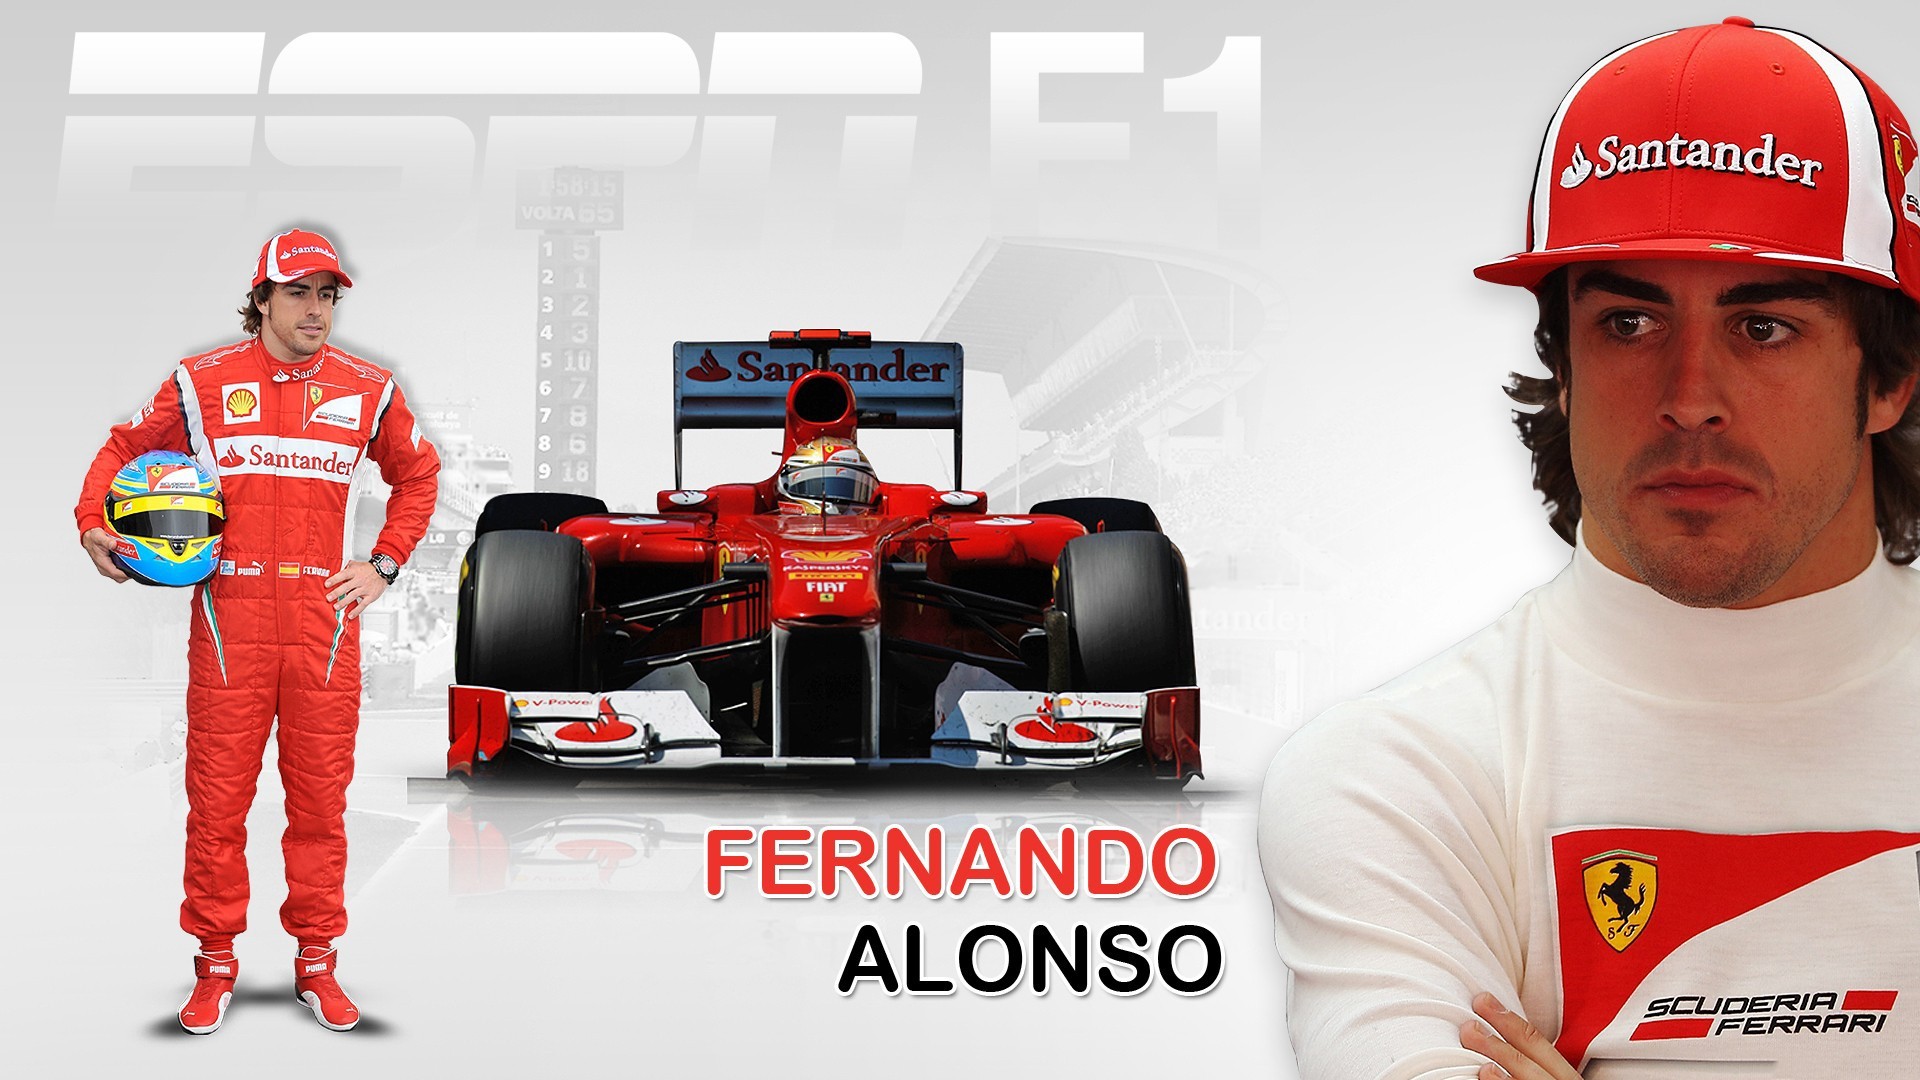 People 1920x1080 Formula 1 Scuderia Ferrari Fernando Alonso car vehicle race cars men sport motorsport Spanish Racing driver